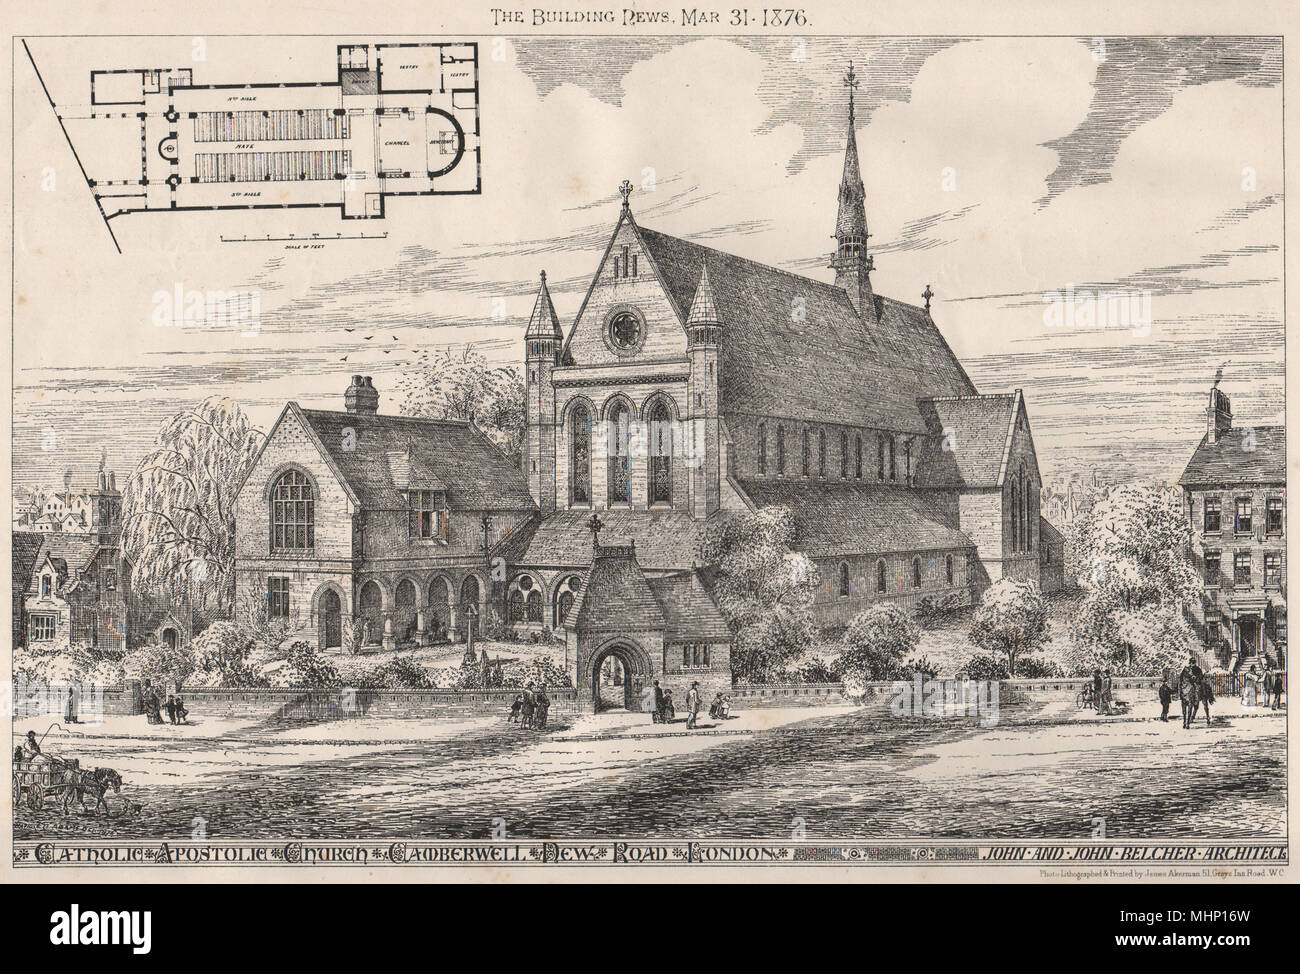 Katholisch-apostolischen Kirche, Camberwell New Road, London; John belcher Archts 1876 Stockfoto